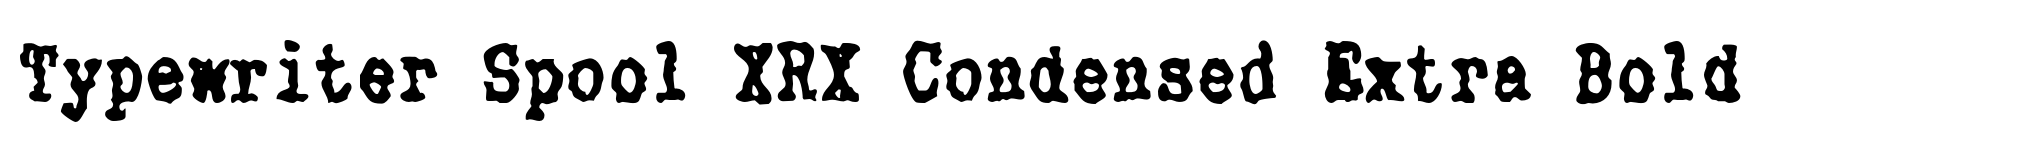 Typewriter Spool XRX Condensed Extra Bold image